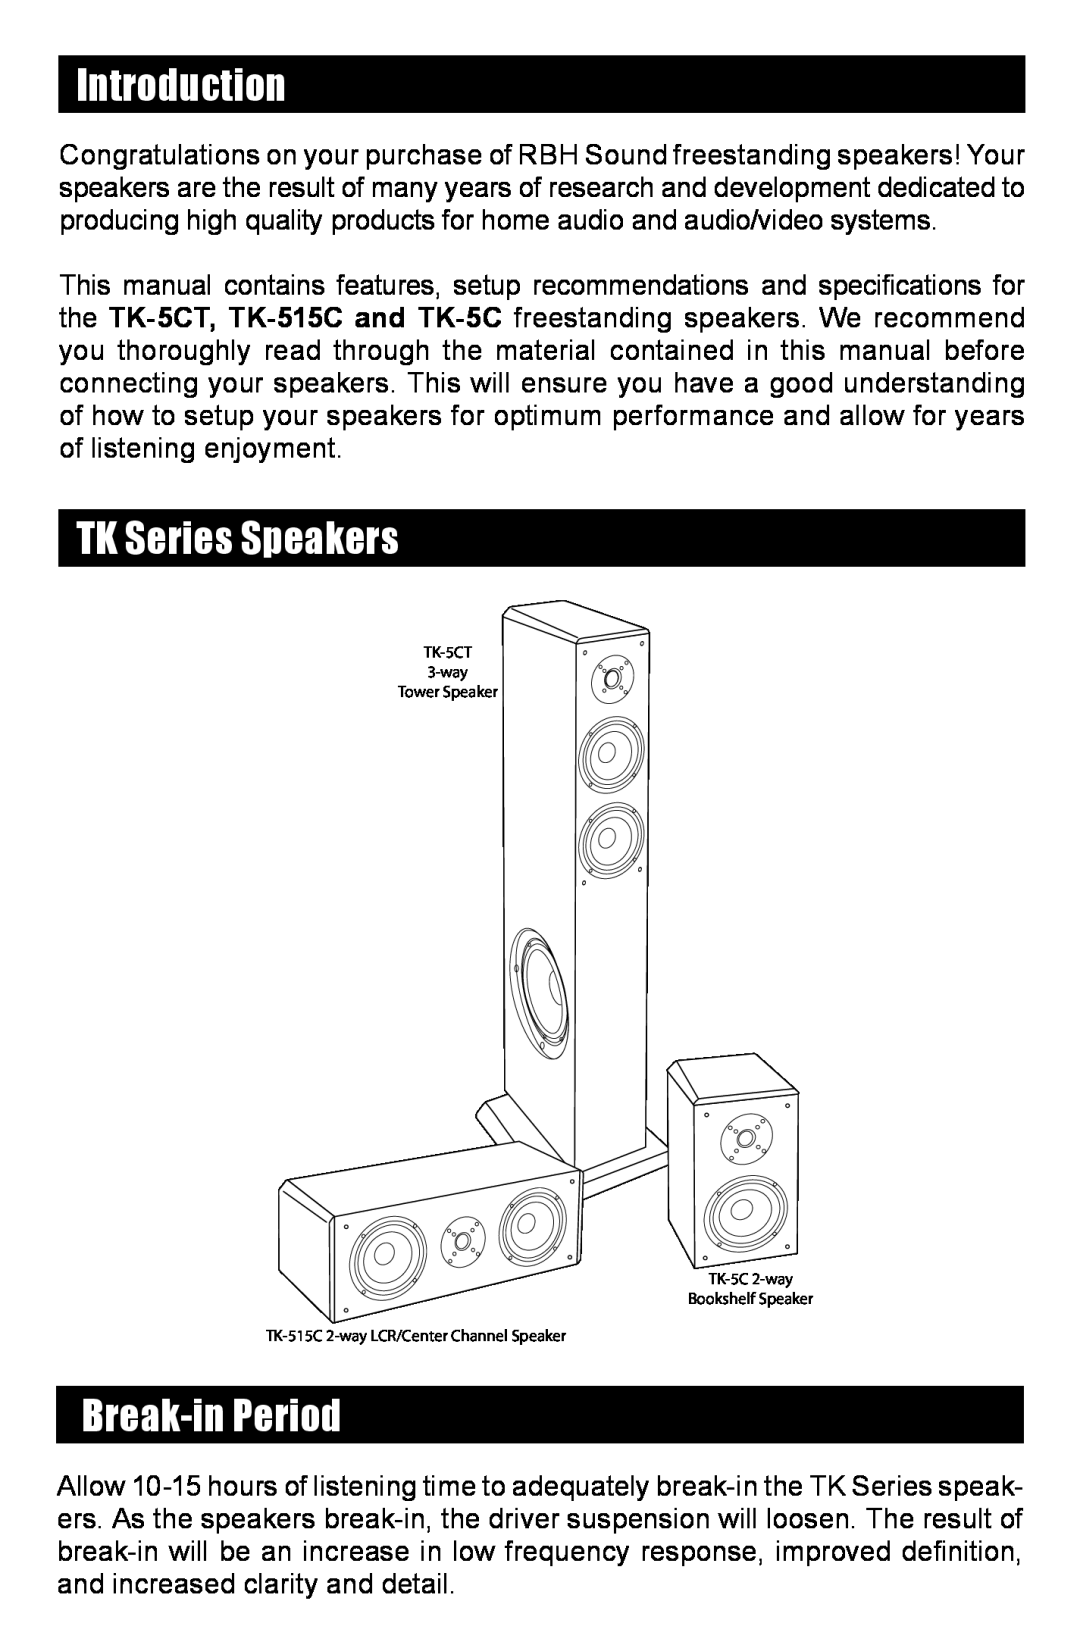 RBH Sound Introduction, TK Series Speakers, Break-inPeriod, TK-5CT 3-way Tower Speaker TK-5C 2-way, Bookshelf Speaker 